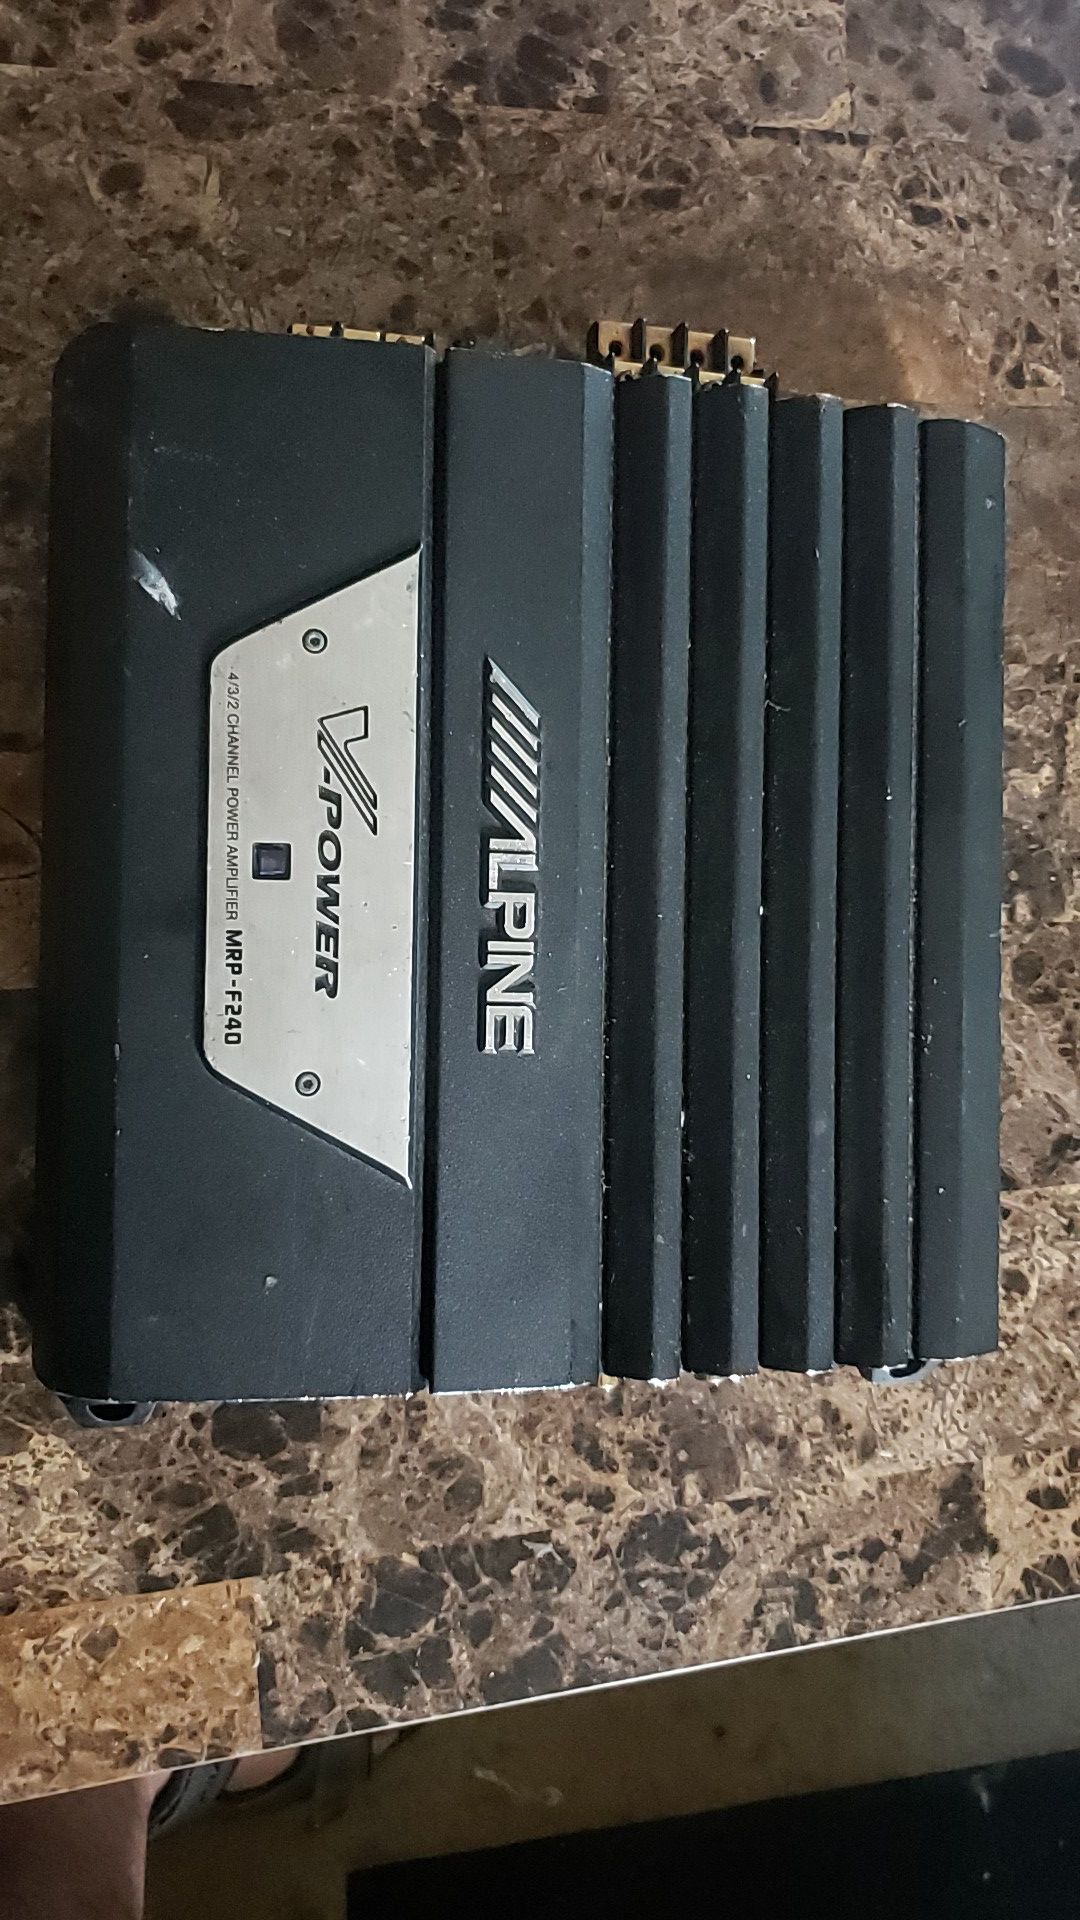 Alpine amplifier